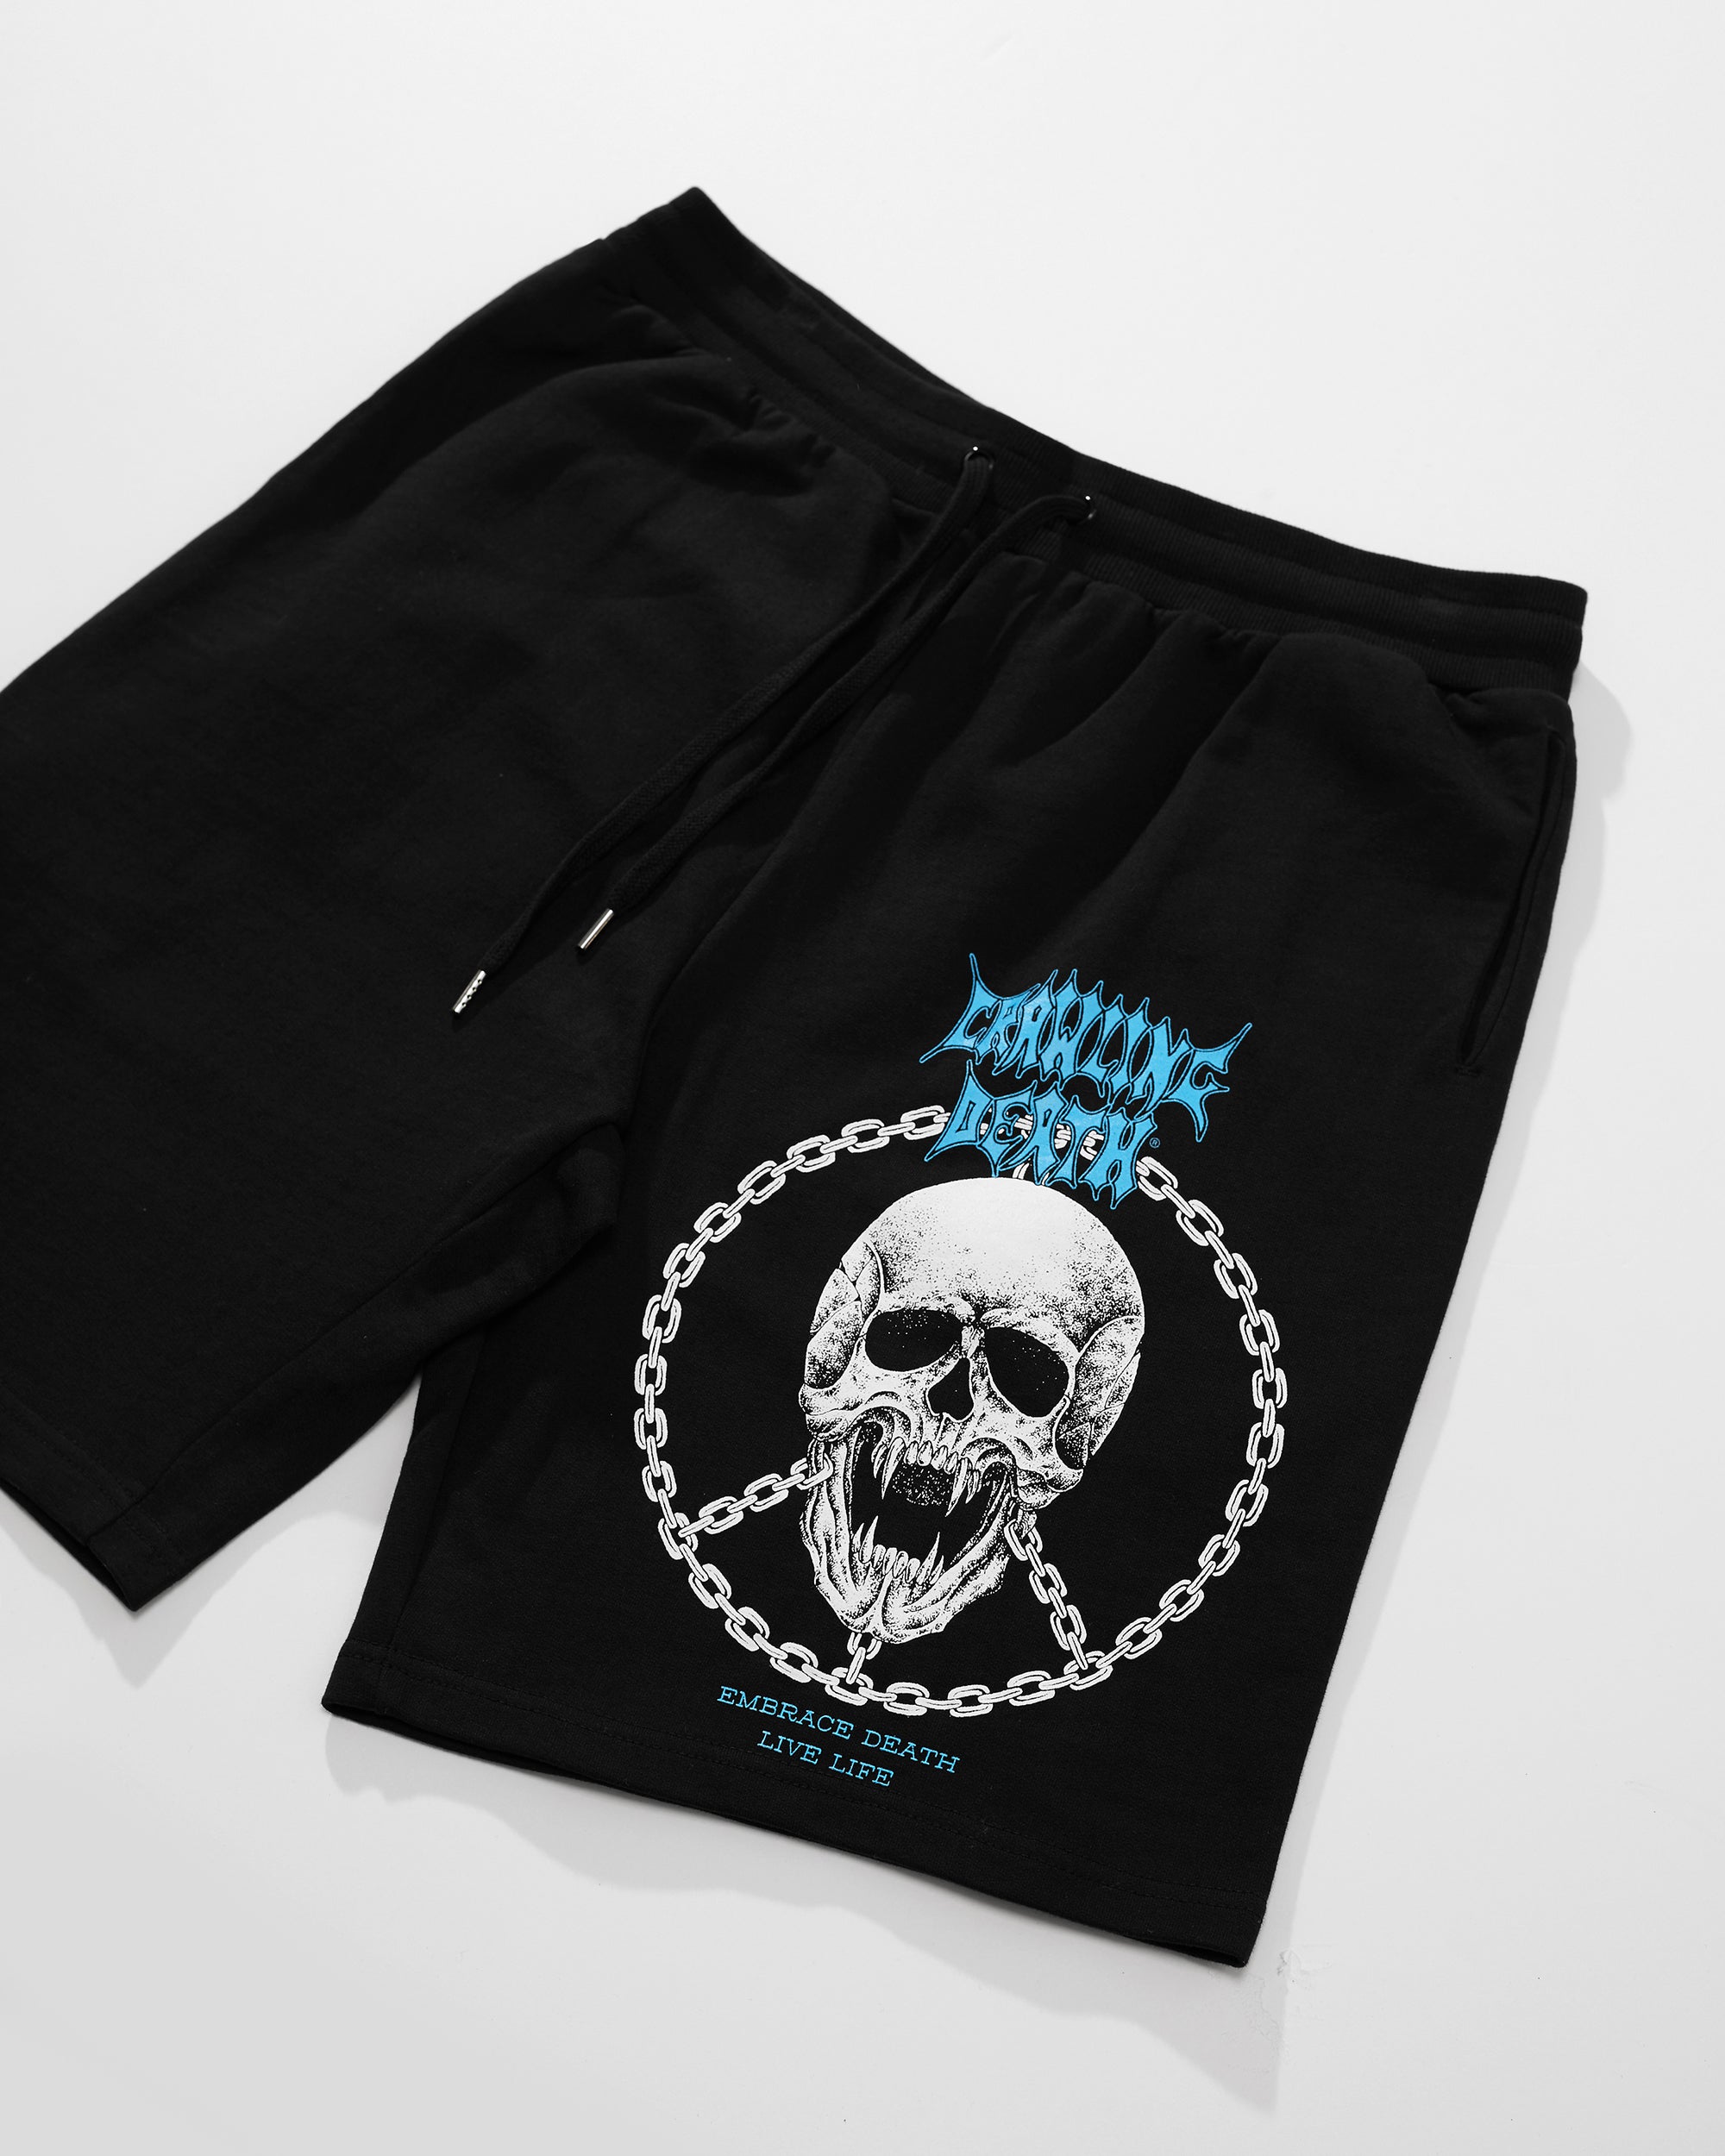 Peace Skull Shorts | Black